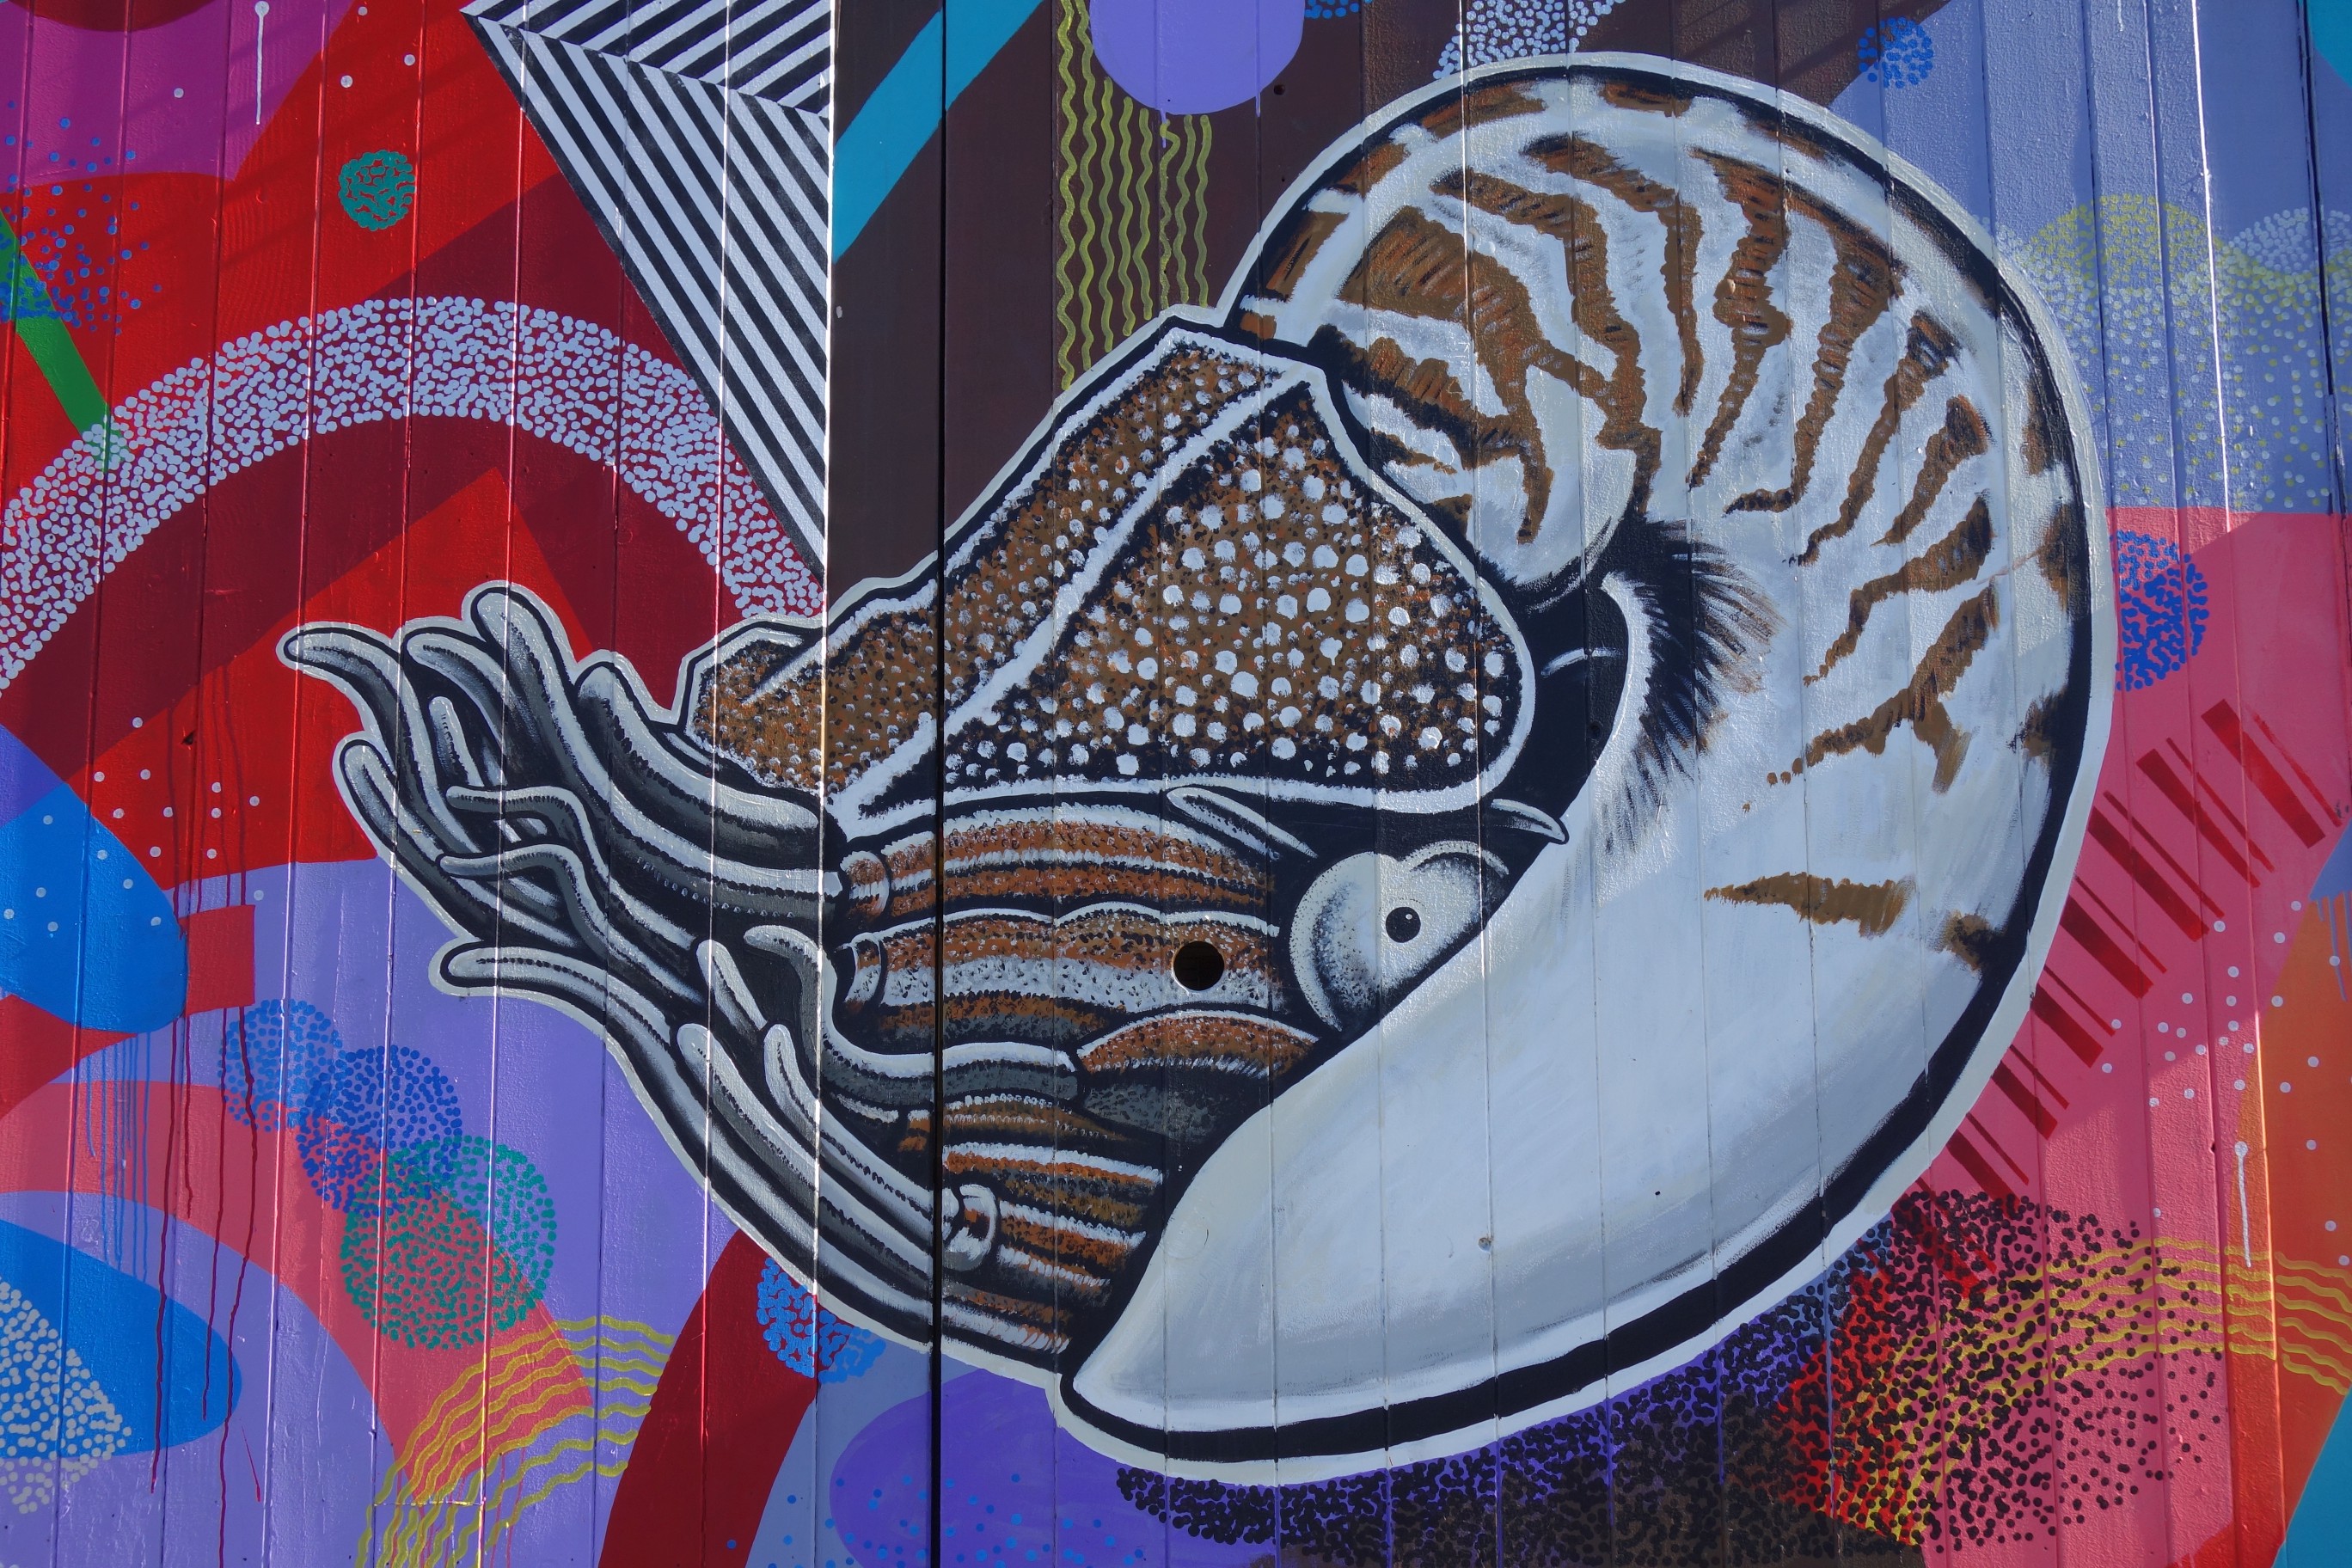 Wellington street art